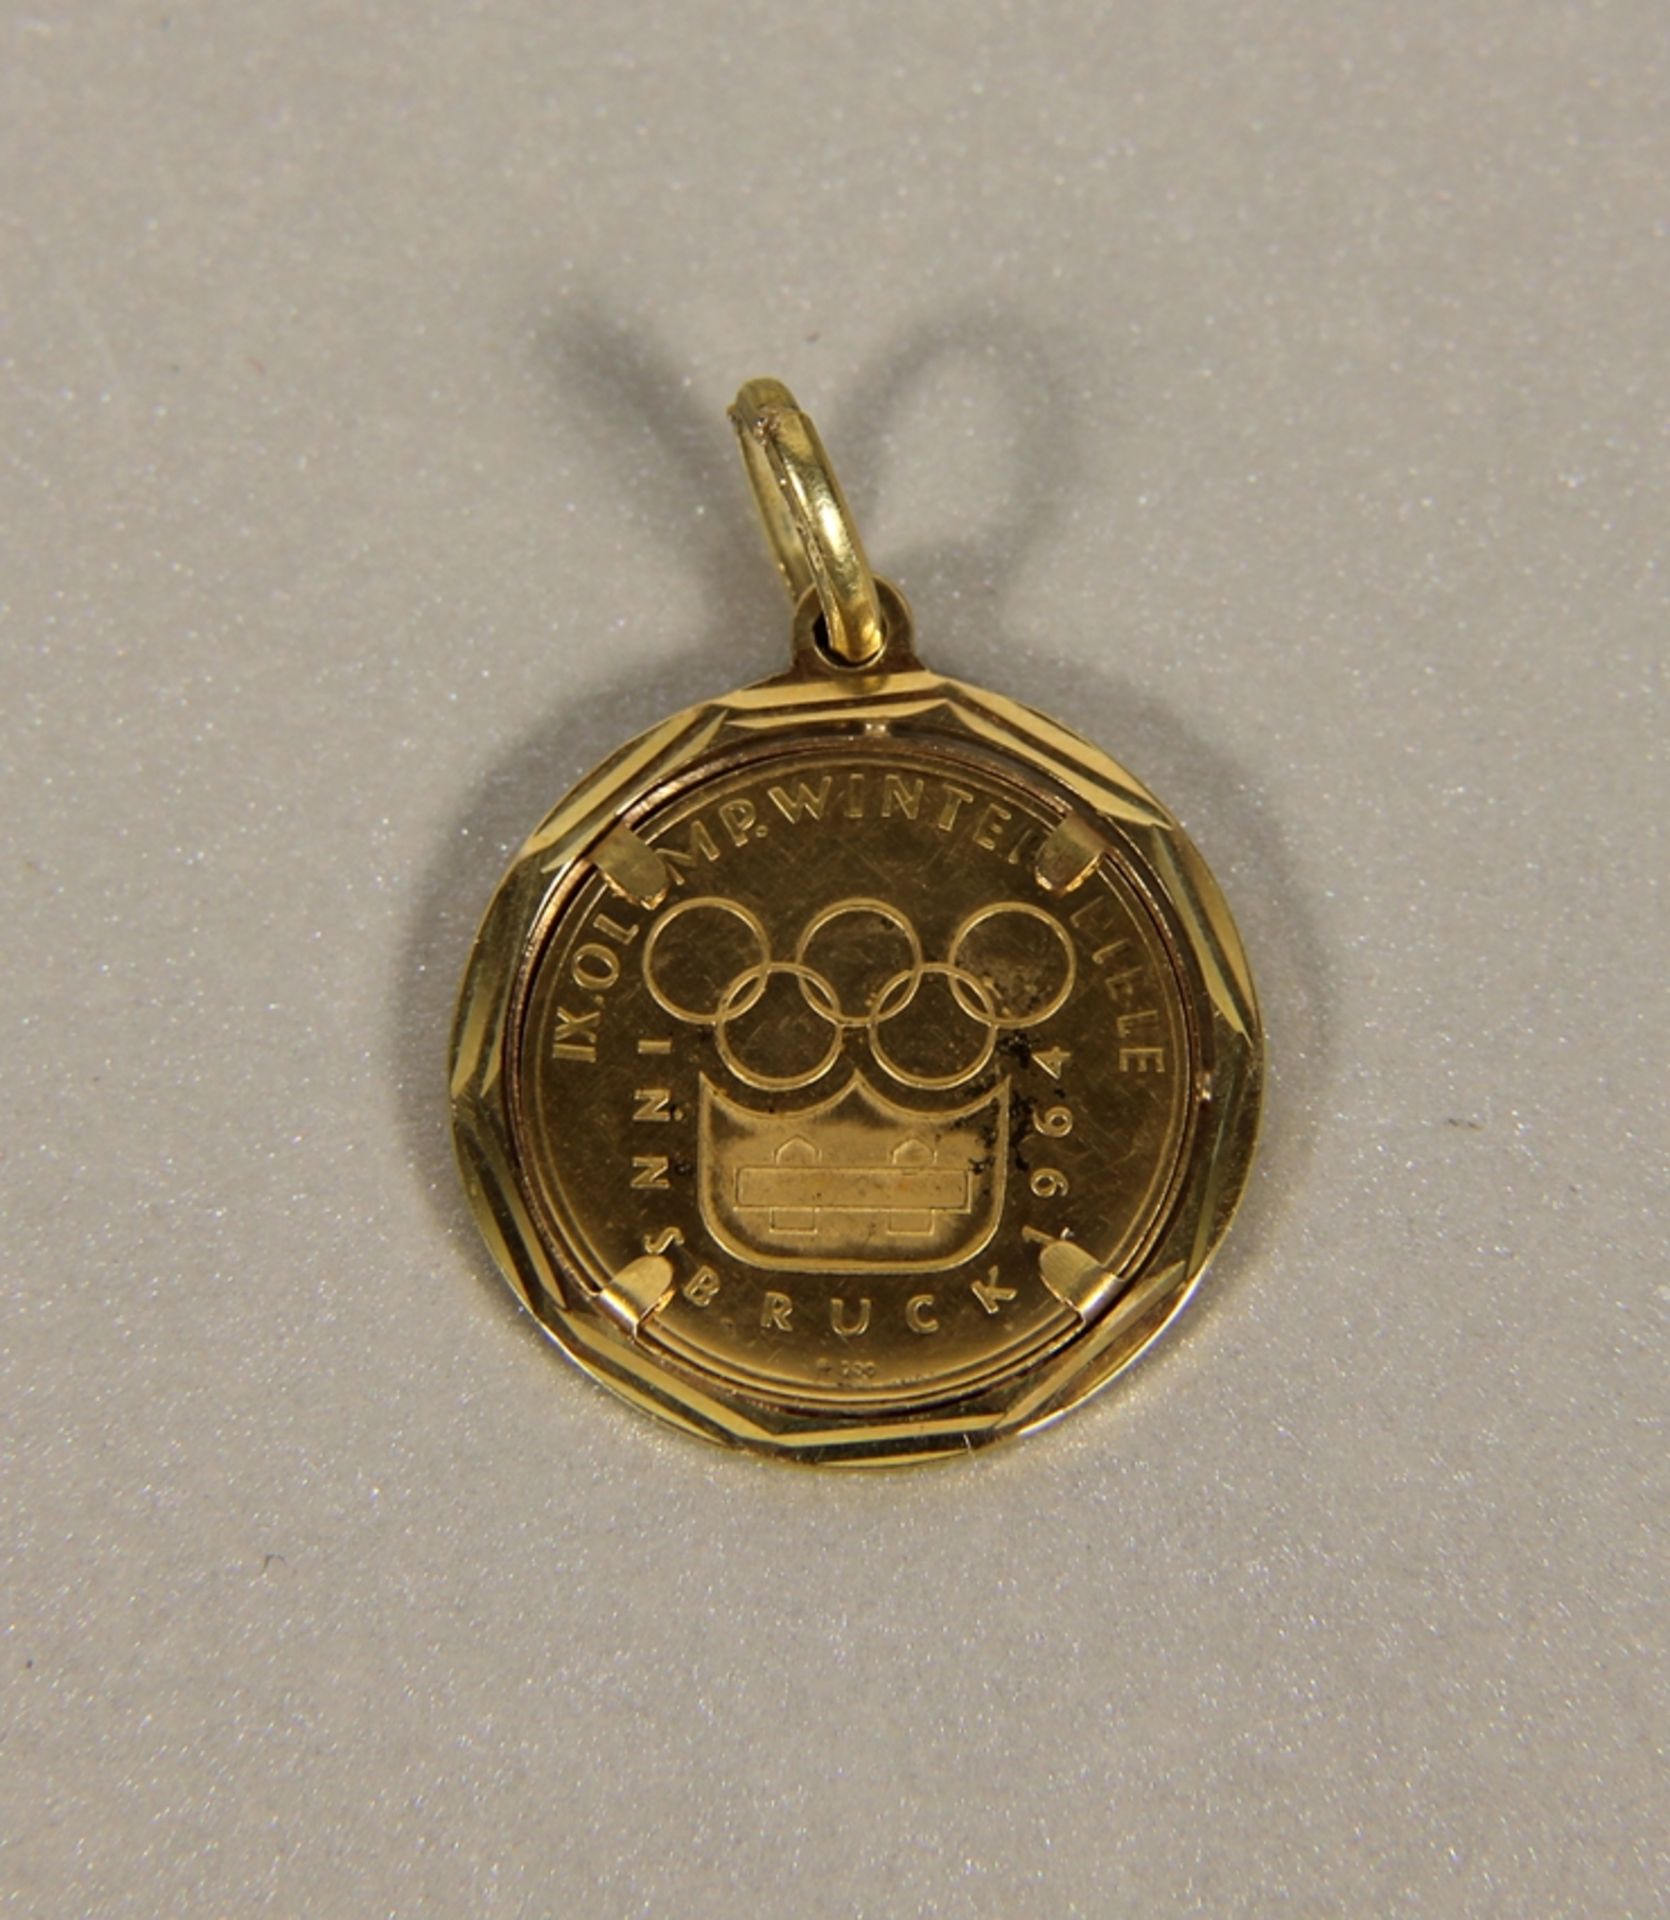 Medaille Innsbruck in Anhängerfassung